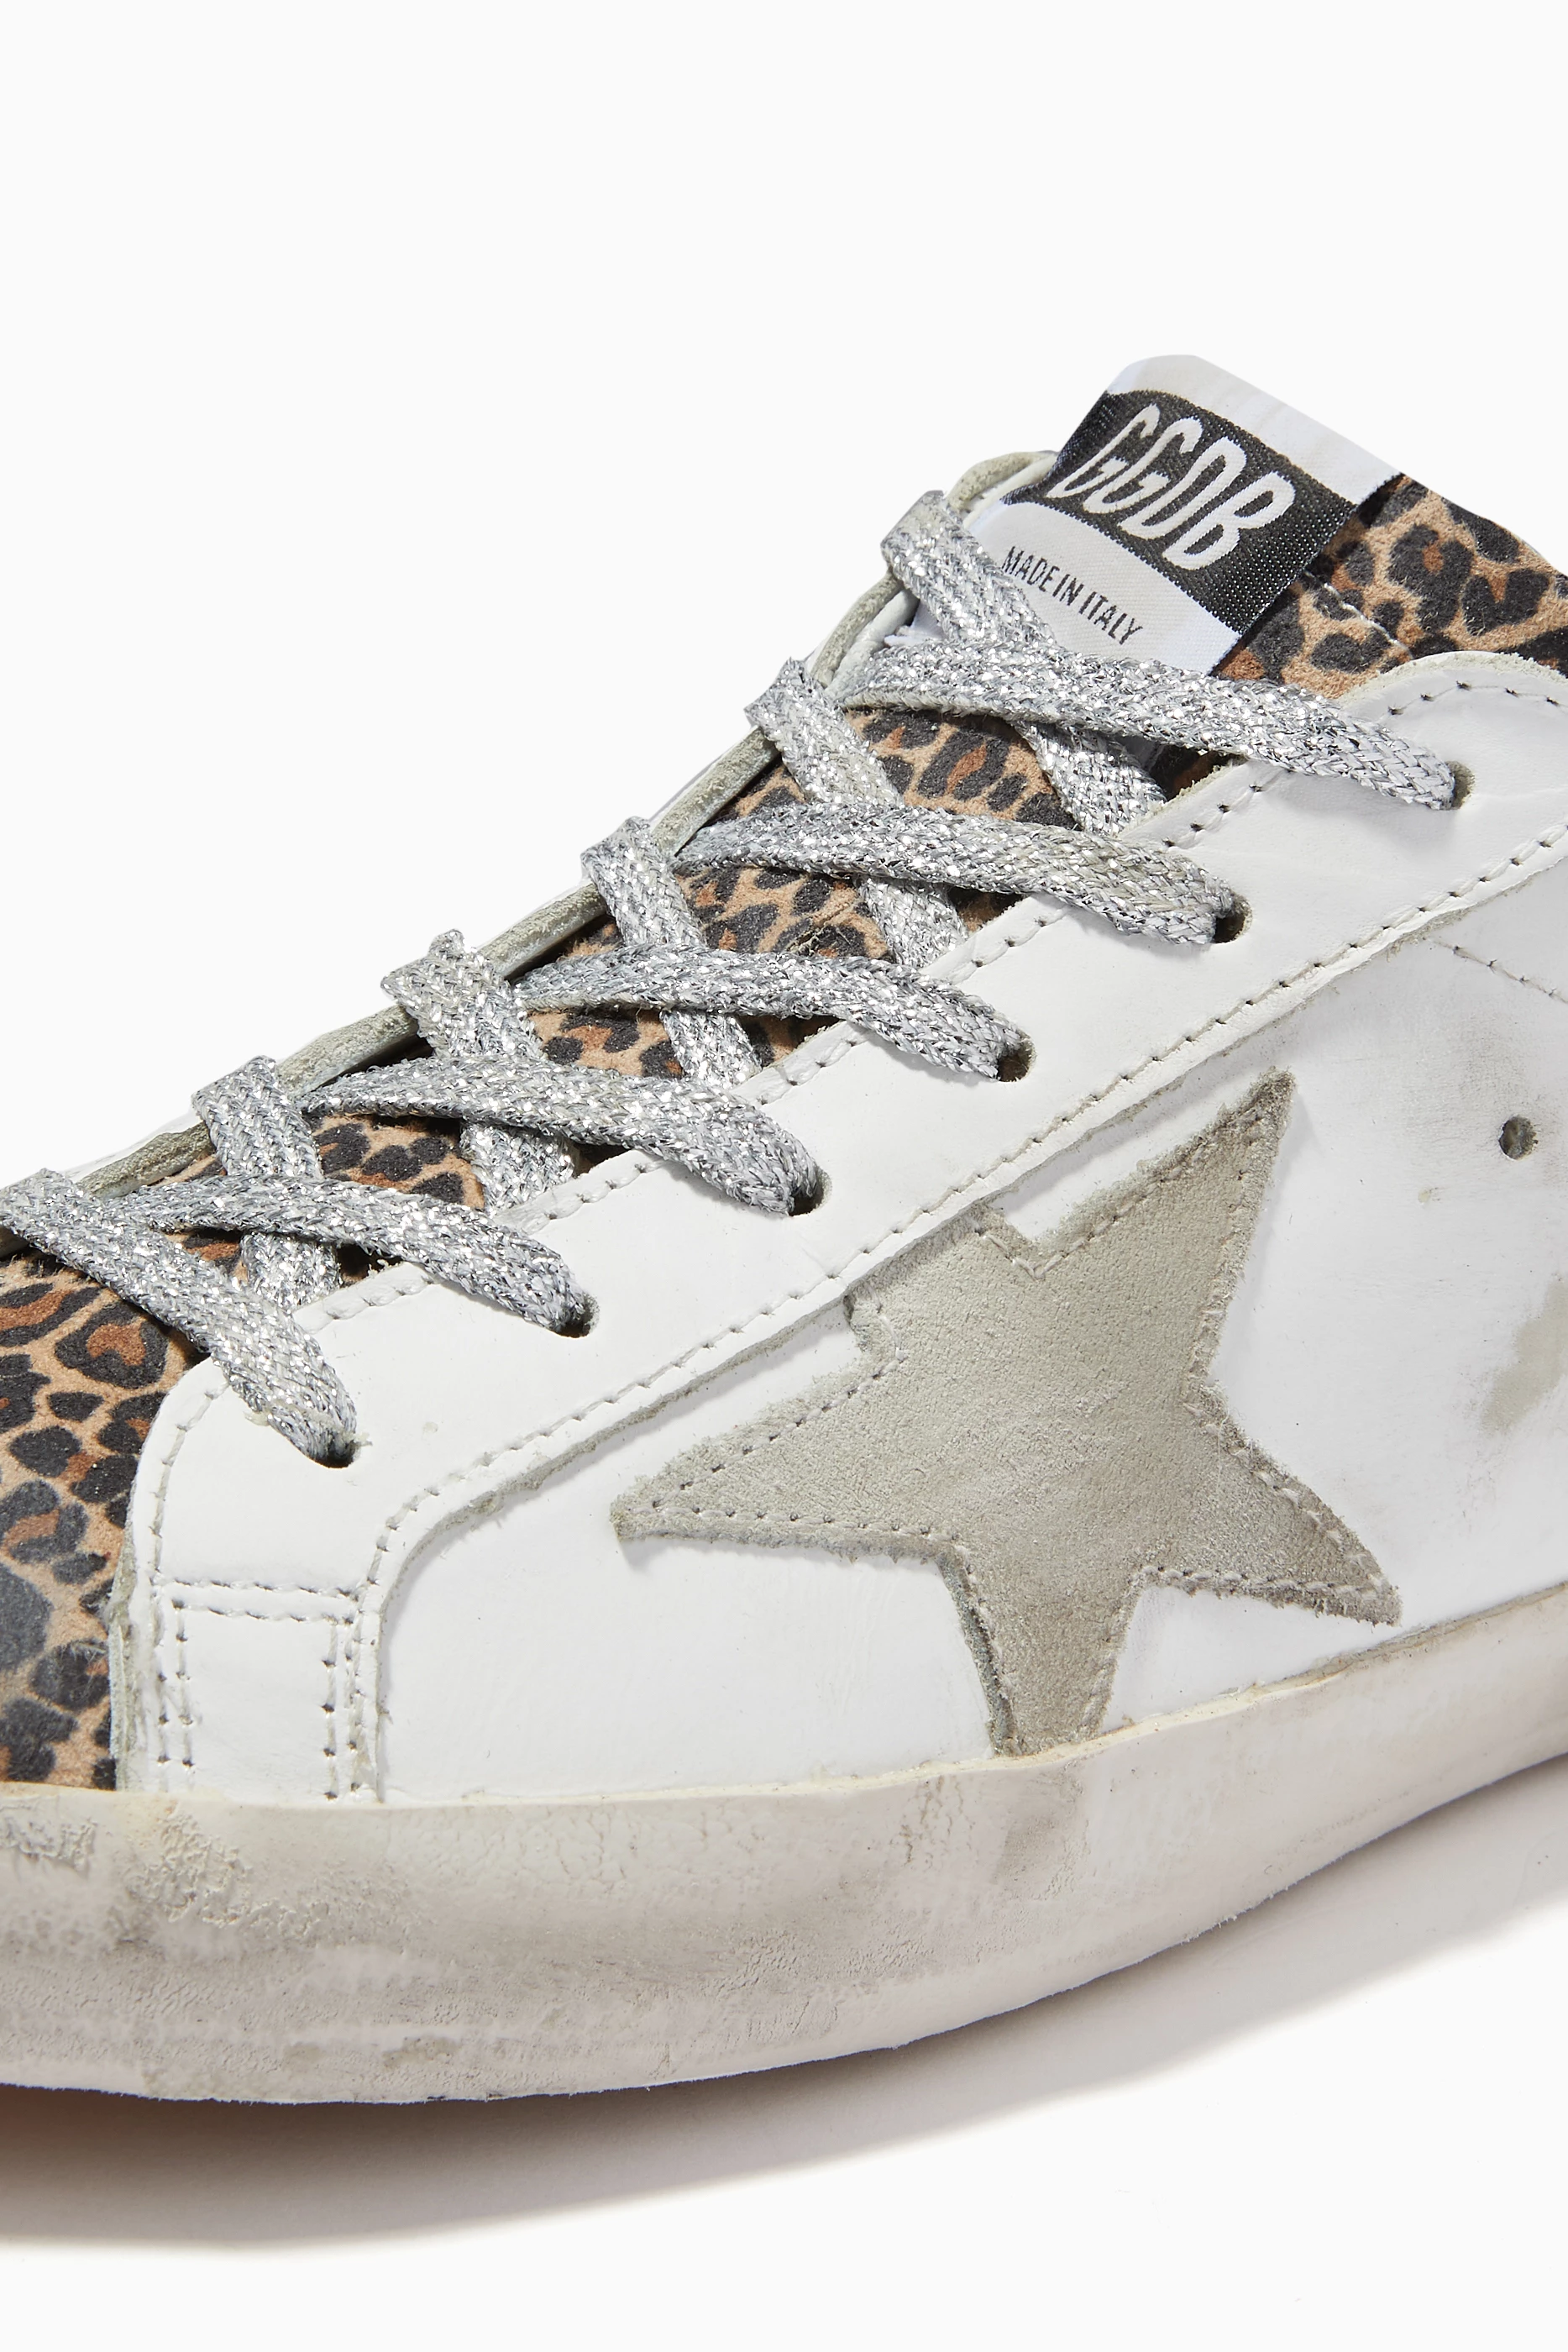 Golden Goose Calf Leather Leopard Super-Star Sneaker in Leopard Print